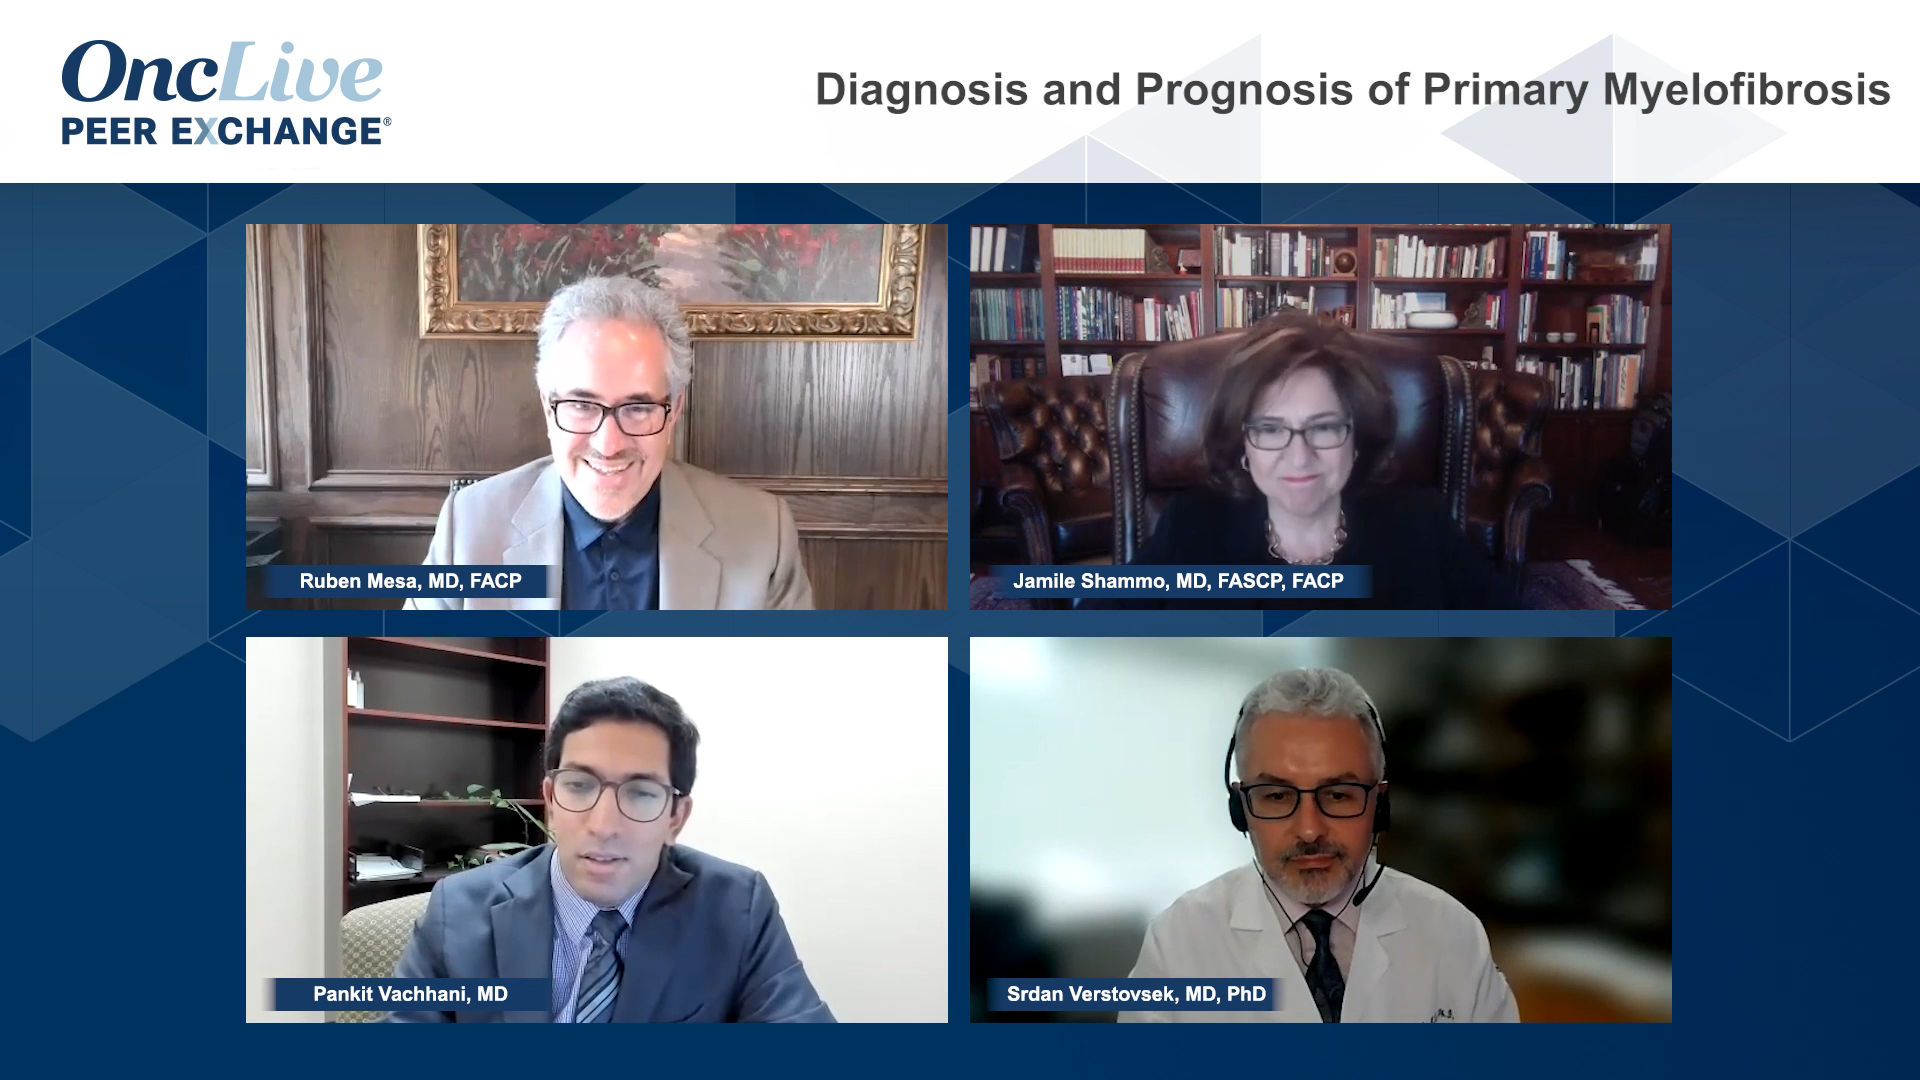 Diagnosis and Prognosis of Primary Myelofibrosis